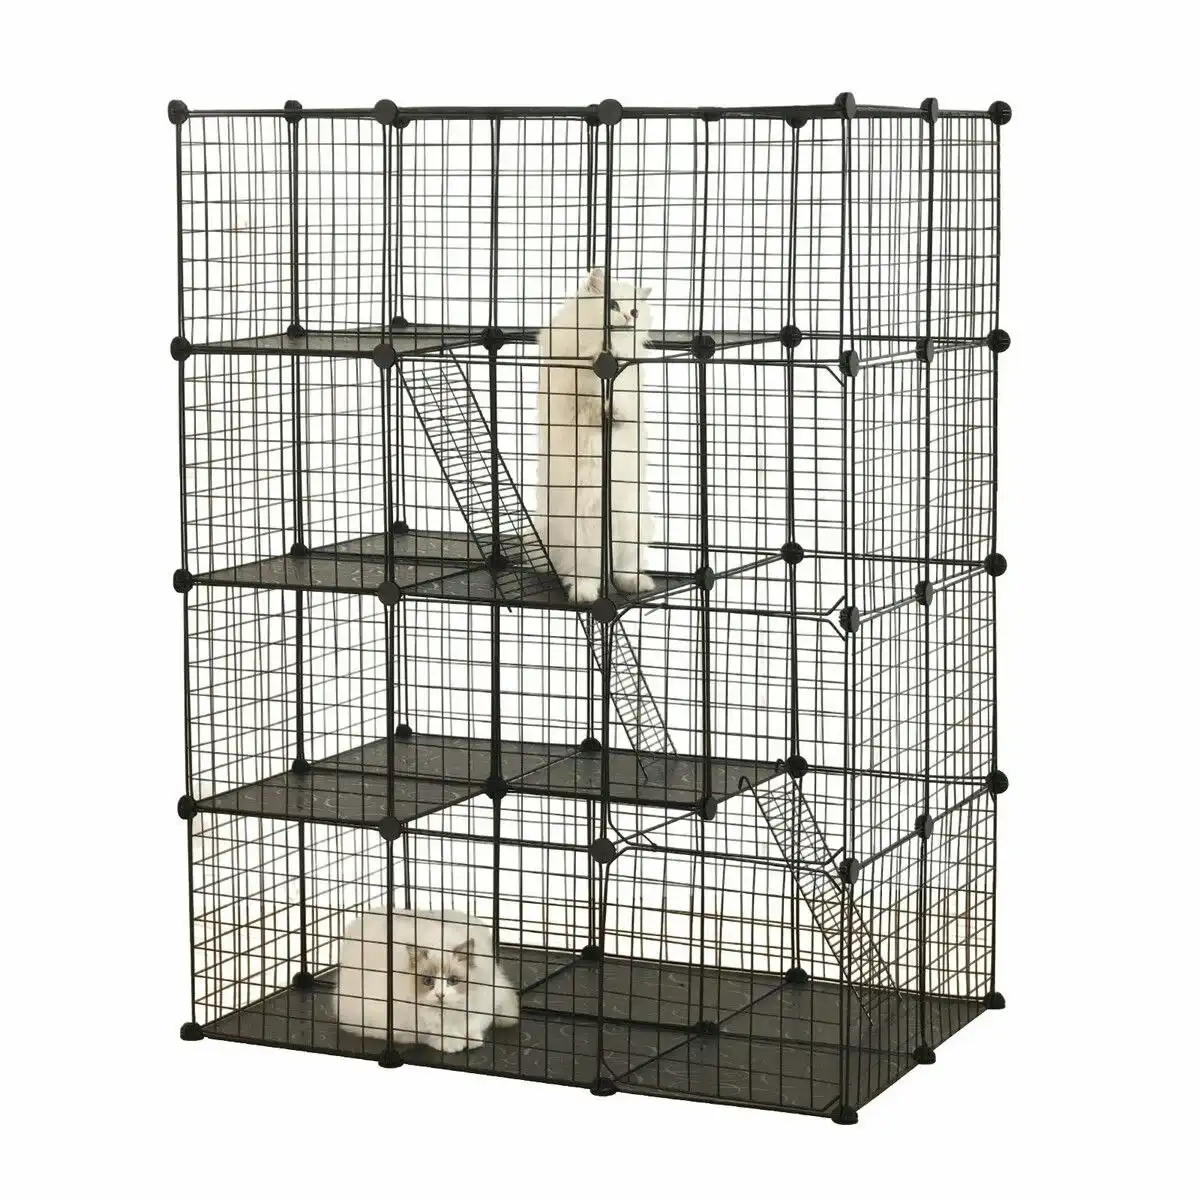 Pet Scene 4 Tier Cat Cage Enclosure Crate XL DIY Rabbit Bunny Ferret Hutch House Cattery Kitty Kitten Fence Kennel Playpen Pen Habitat Platforms Ramps